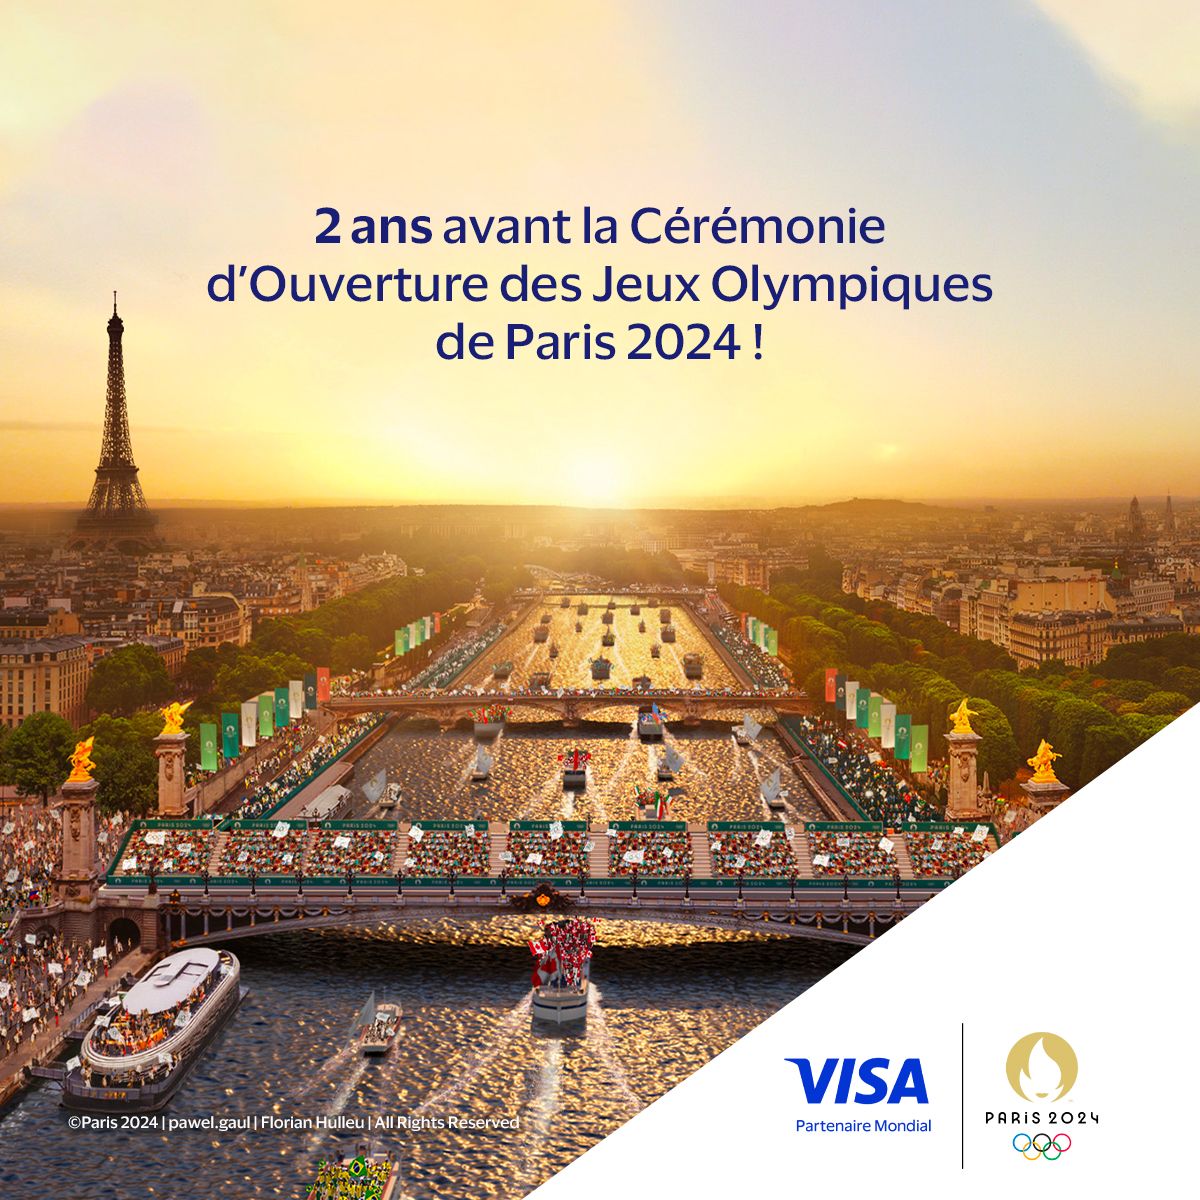 Denise (Kuwabara) Yee on LinkedIn: Paris 2024!! Here we come!!